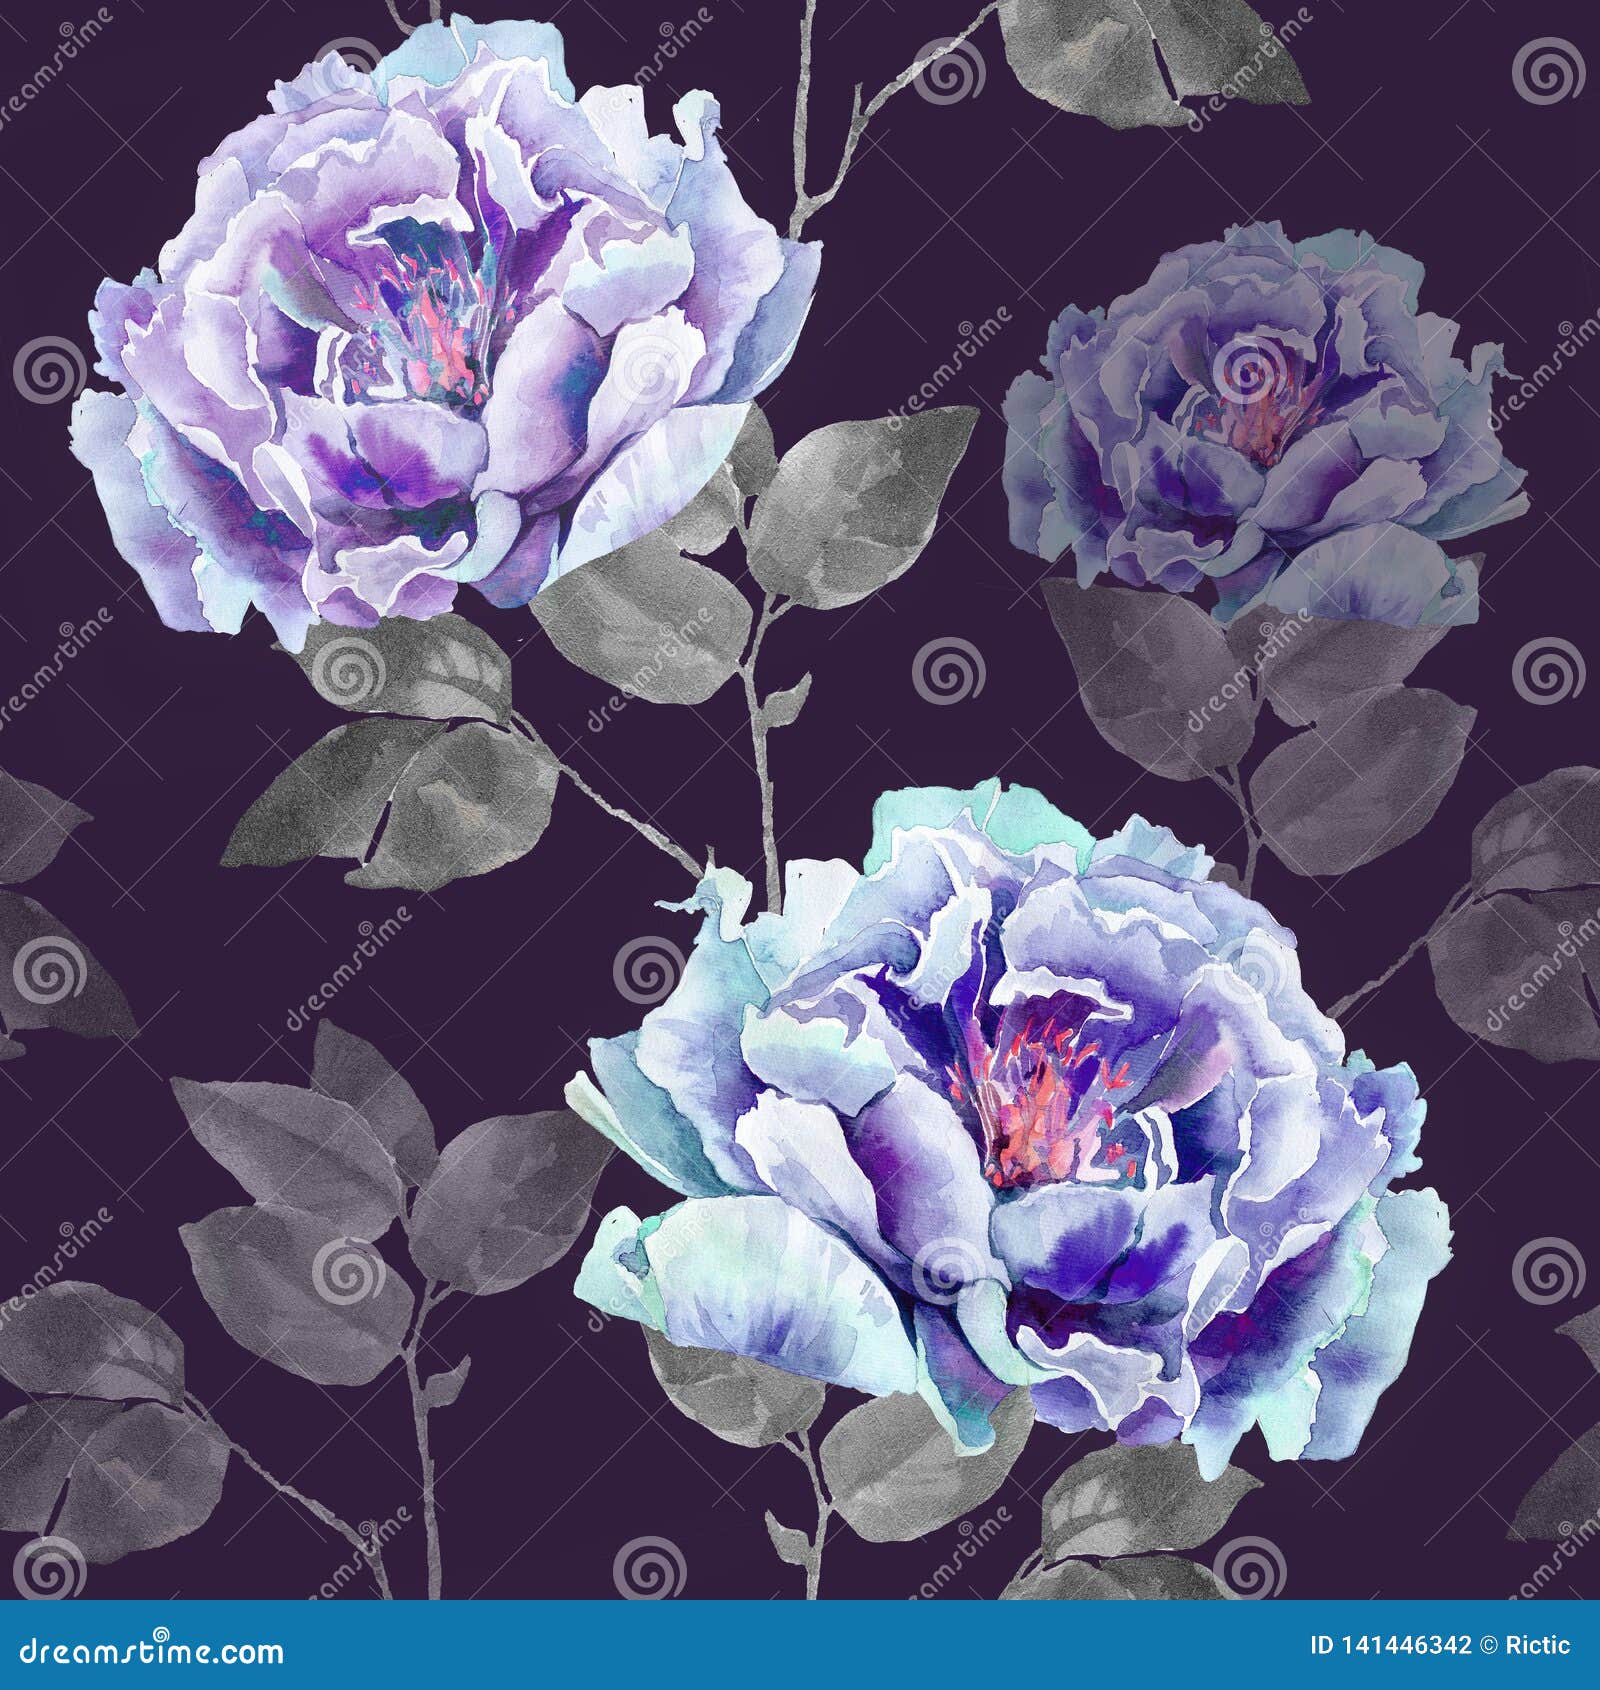 seamless flower pattern for textil or wallpaper on dark background